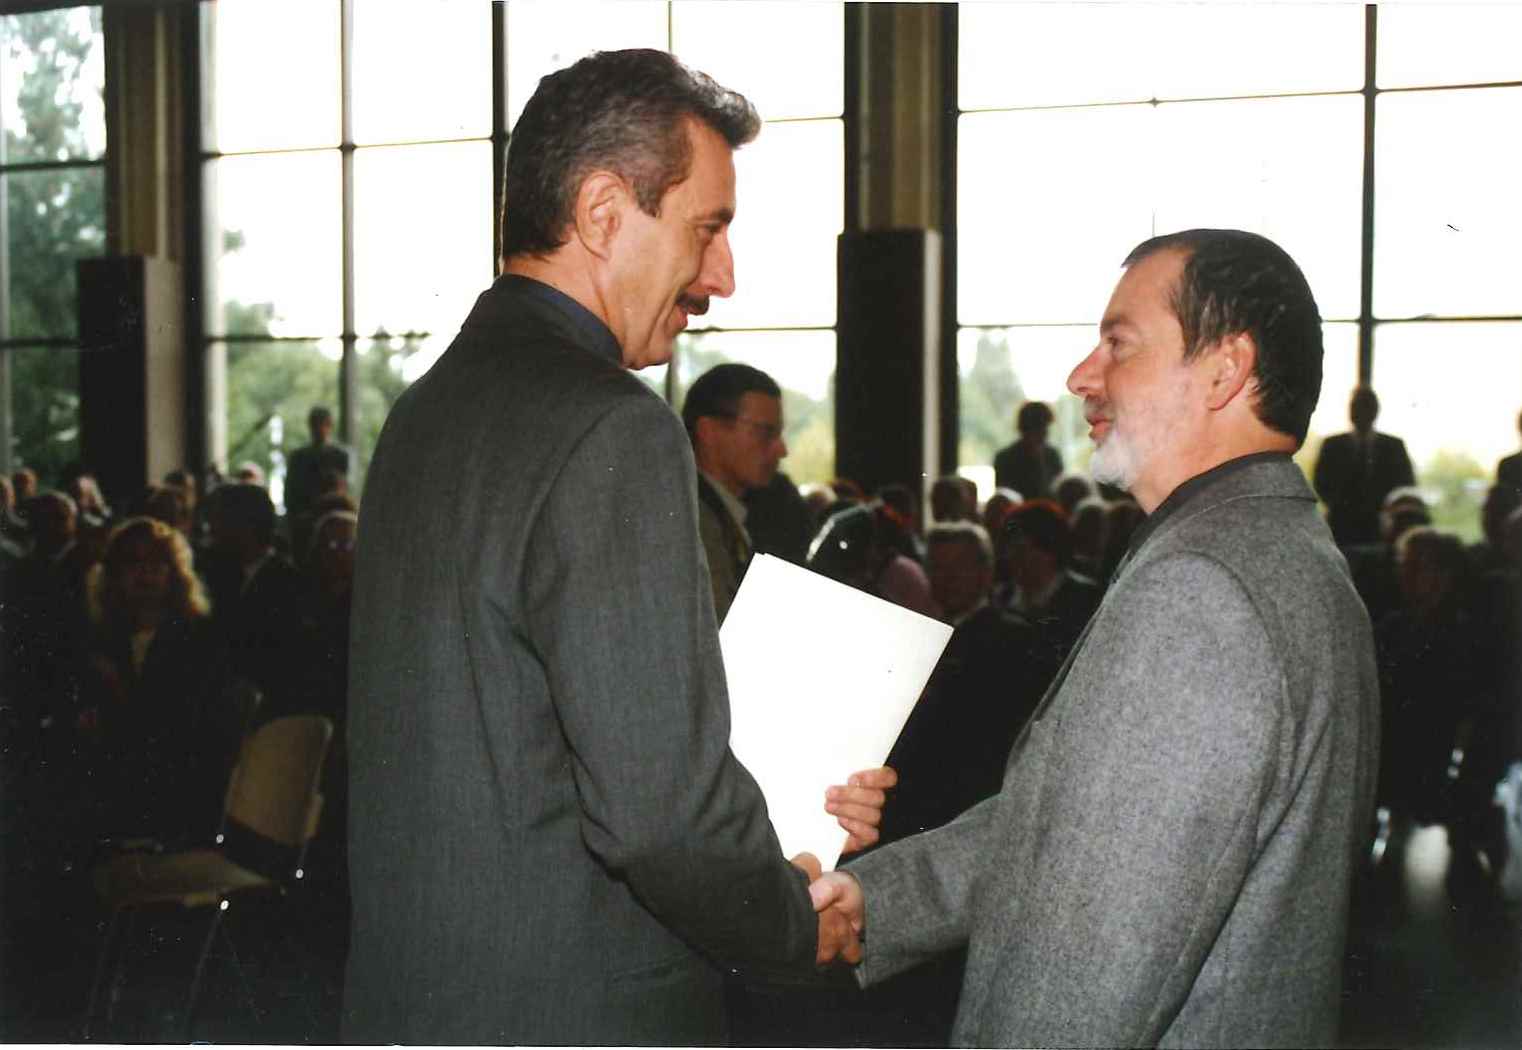 OLUP 2001 Award Ceremony